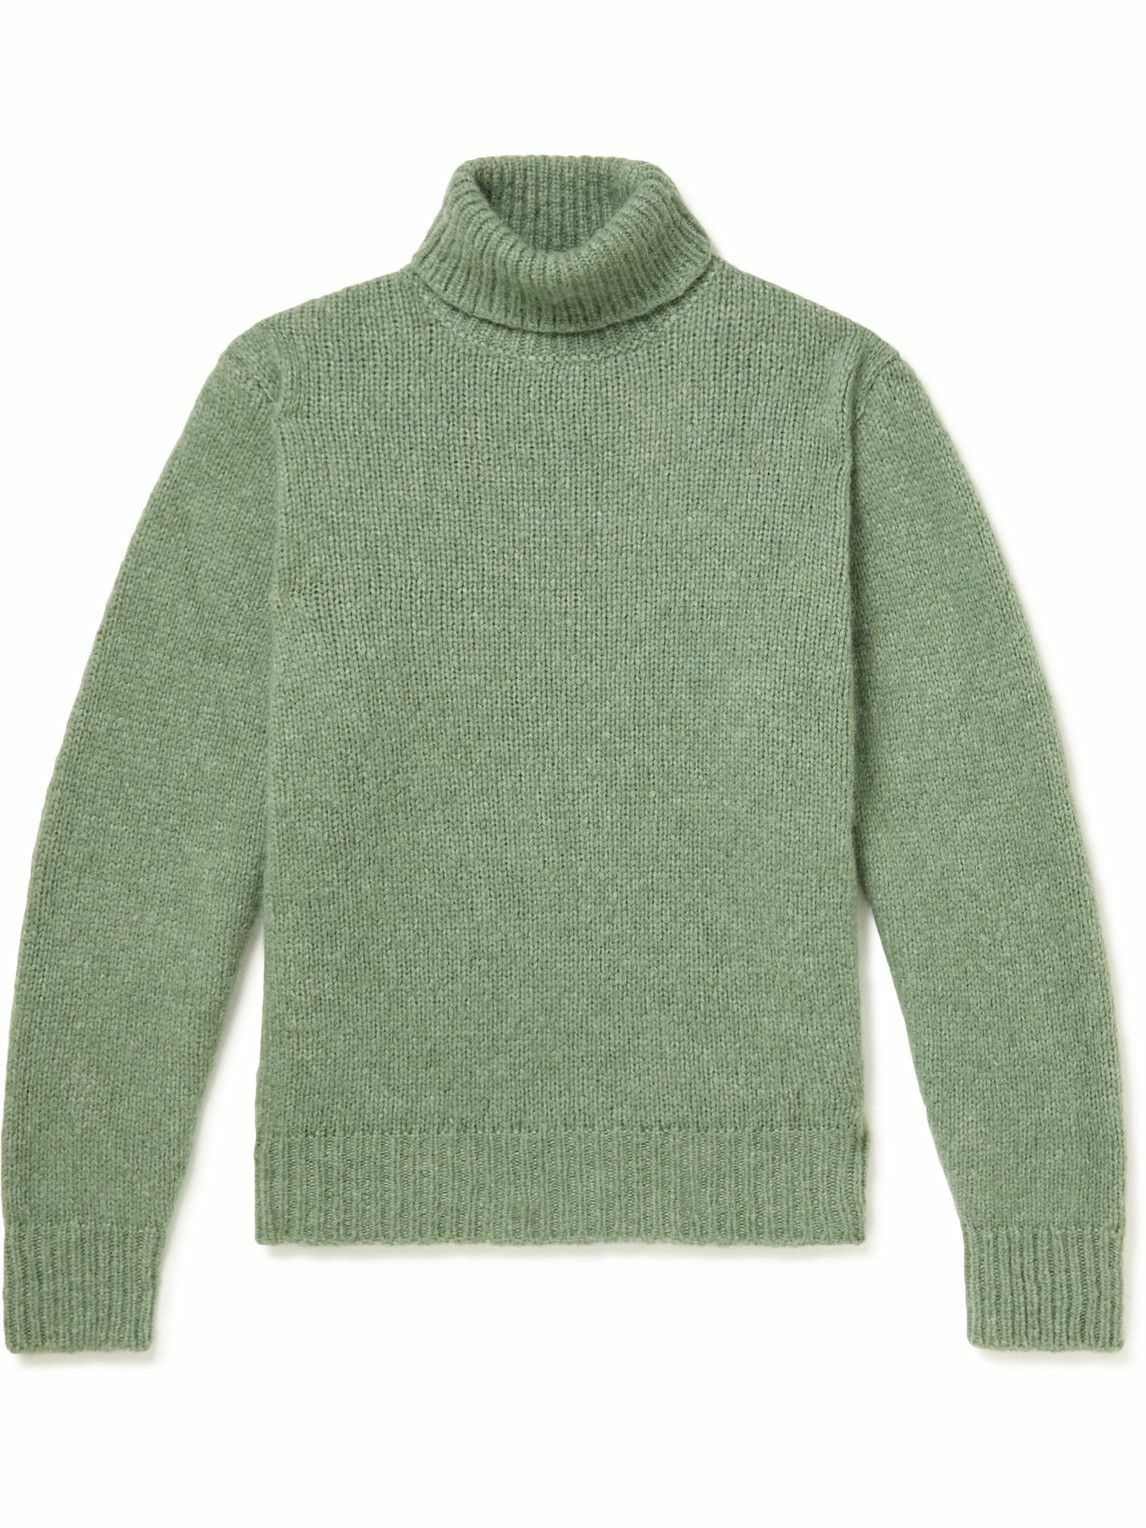 DOPPIAA - Aamintore Alpaca-Blend Rollneck Sweater - Green DOPPIAA